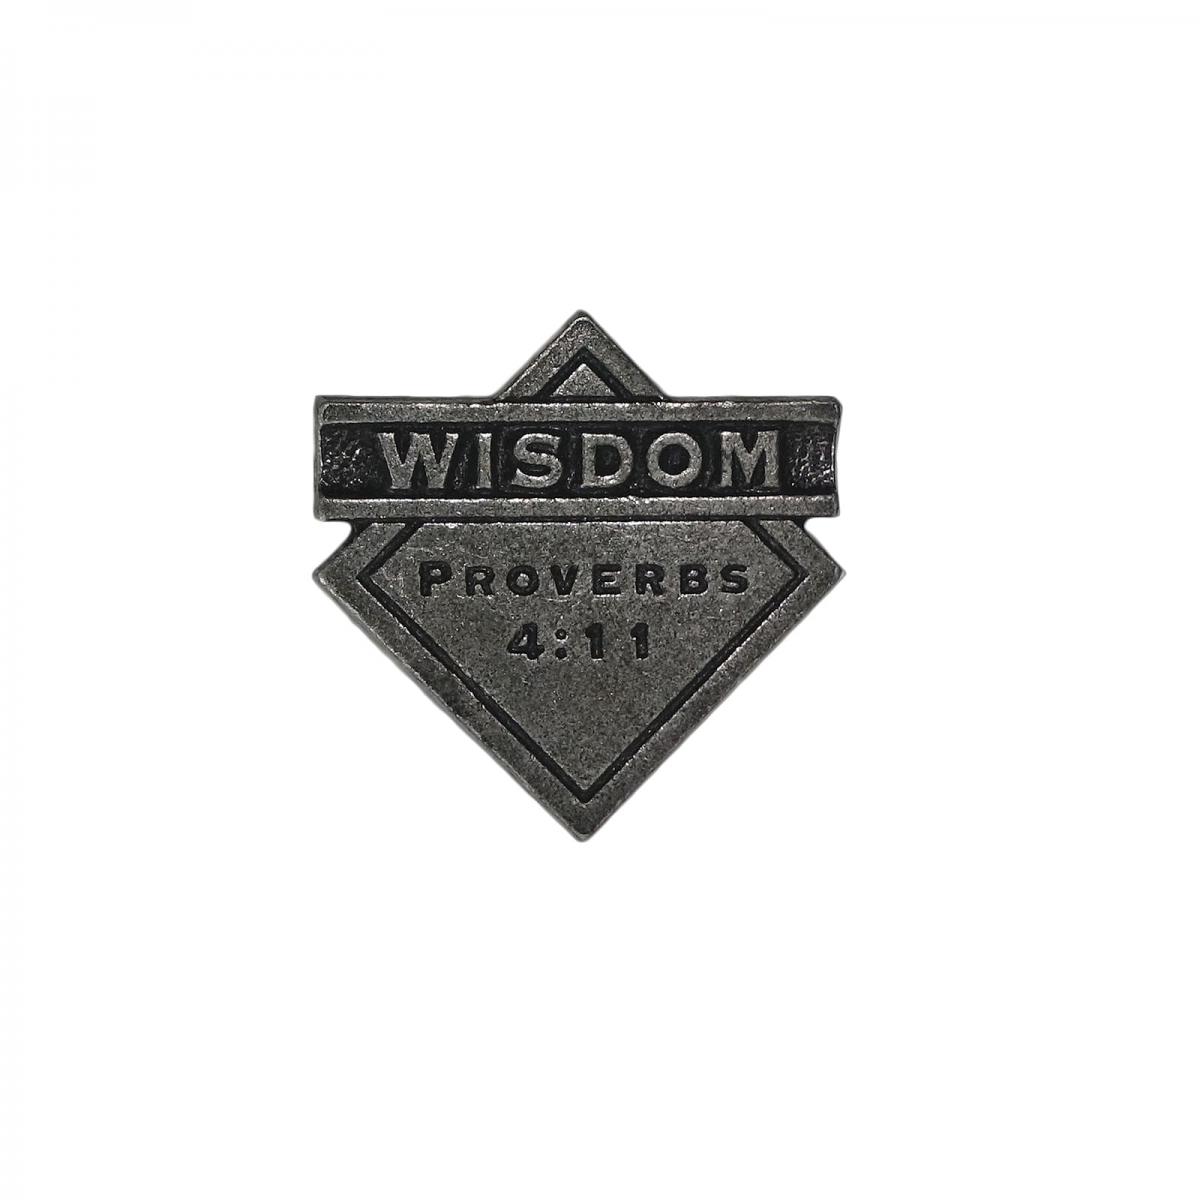 WISDOM ピンズ聖書の一節 PROVERBS 4;11 留め具付き